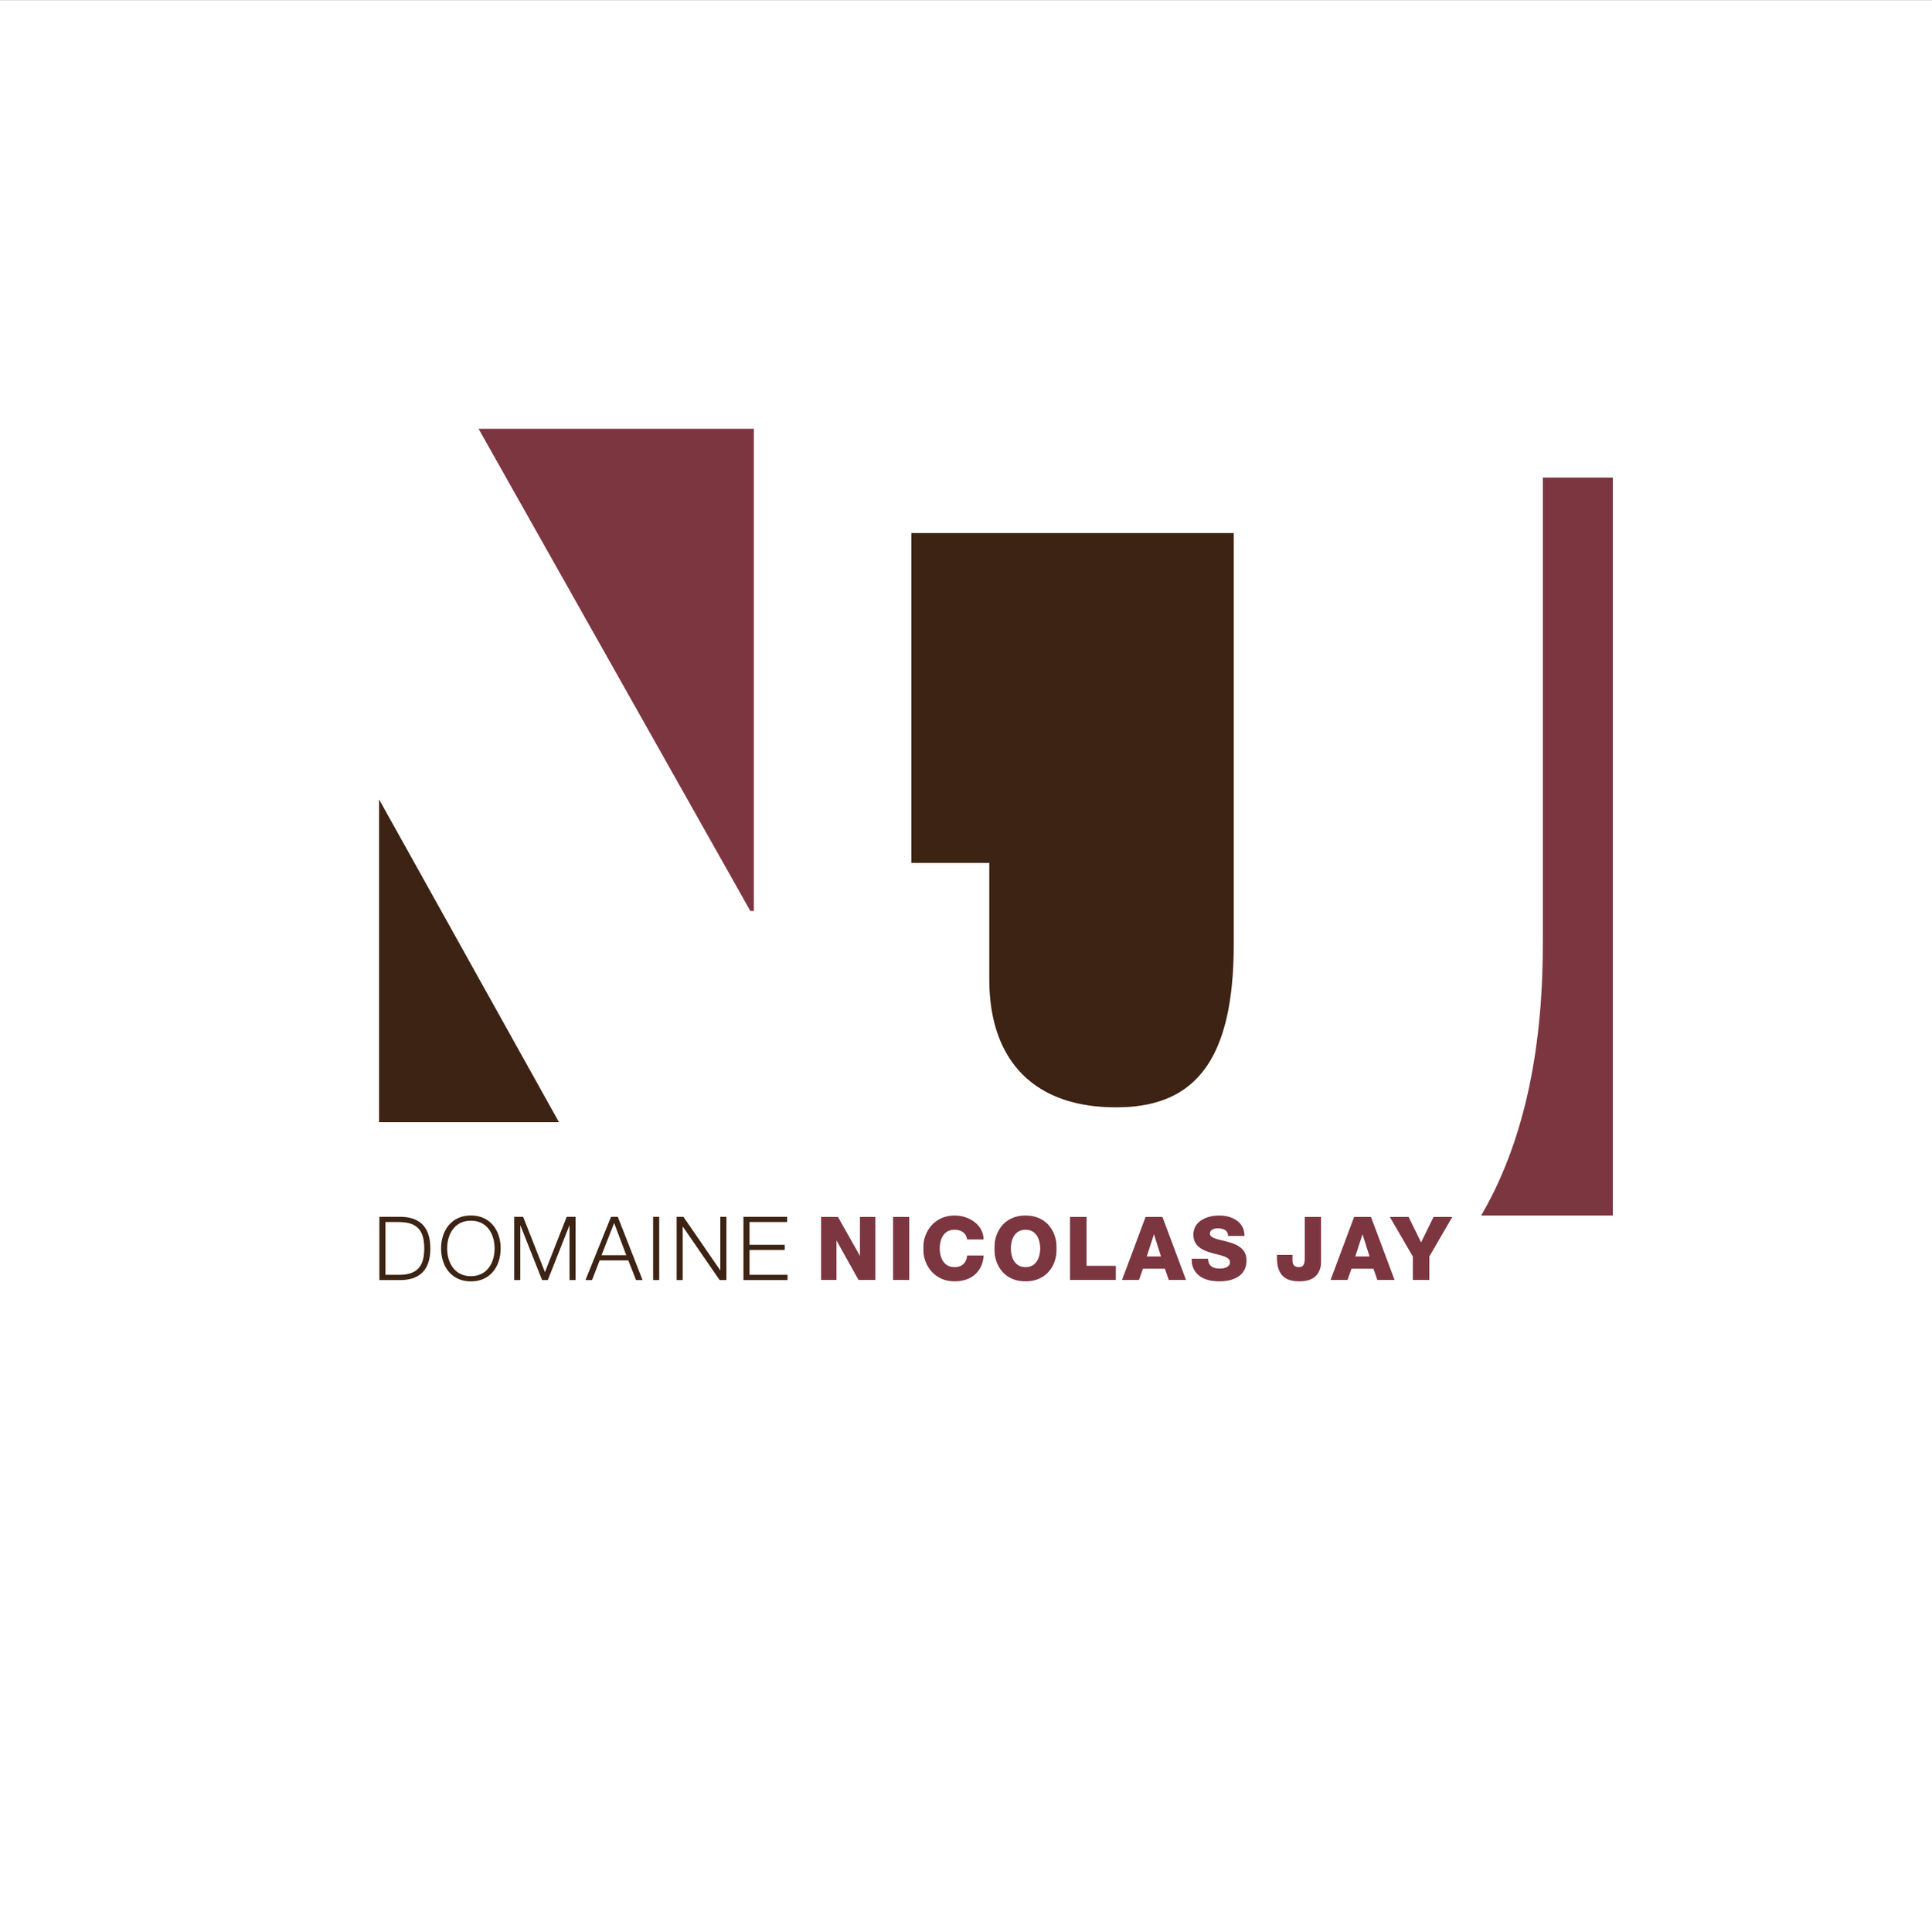 2015: Domaine Nicholas Jay (proposed logo/identity)